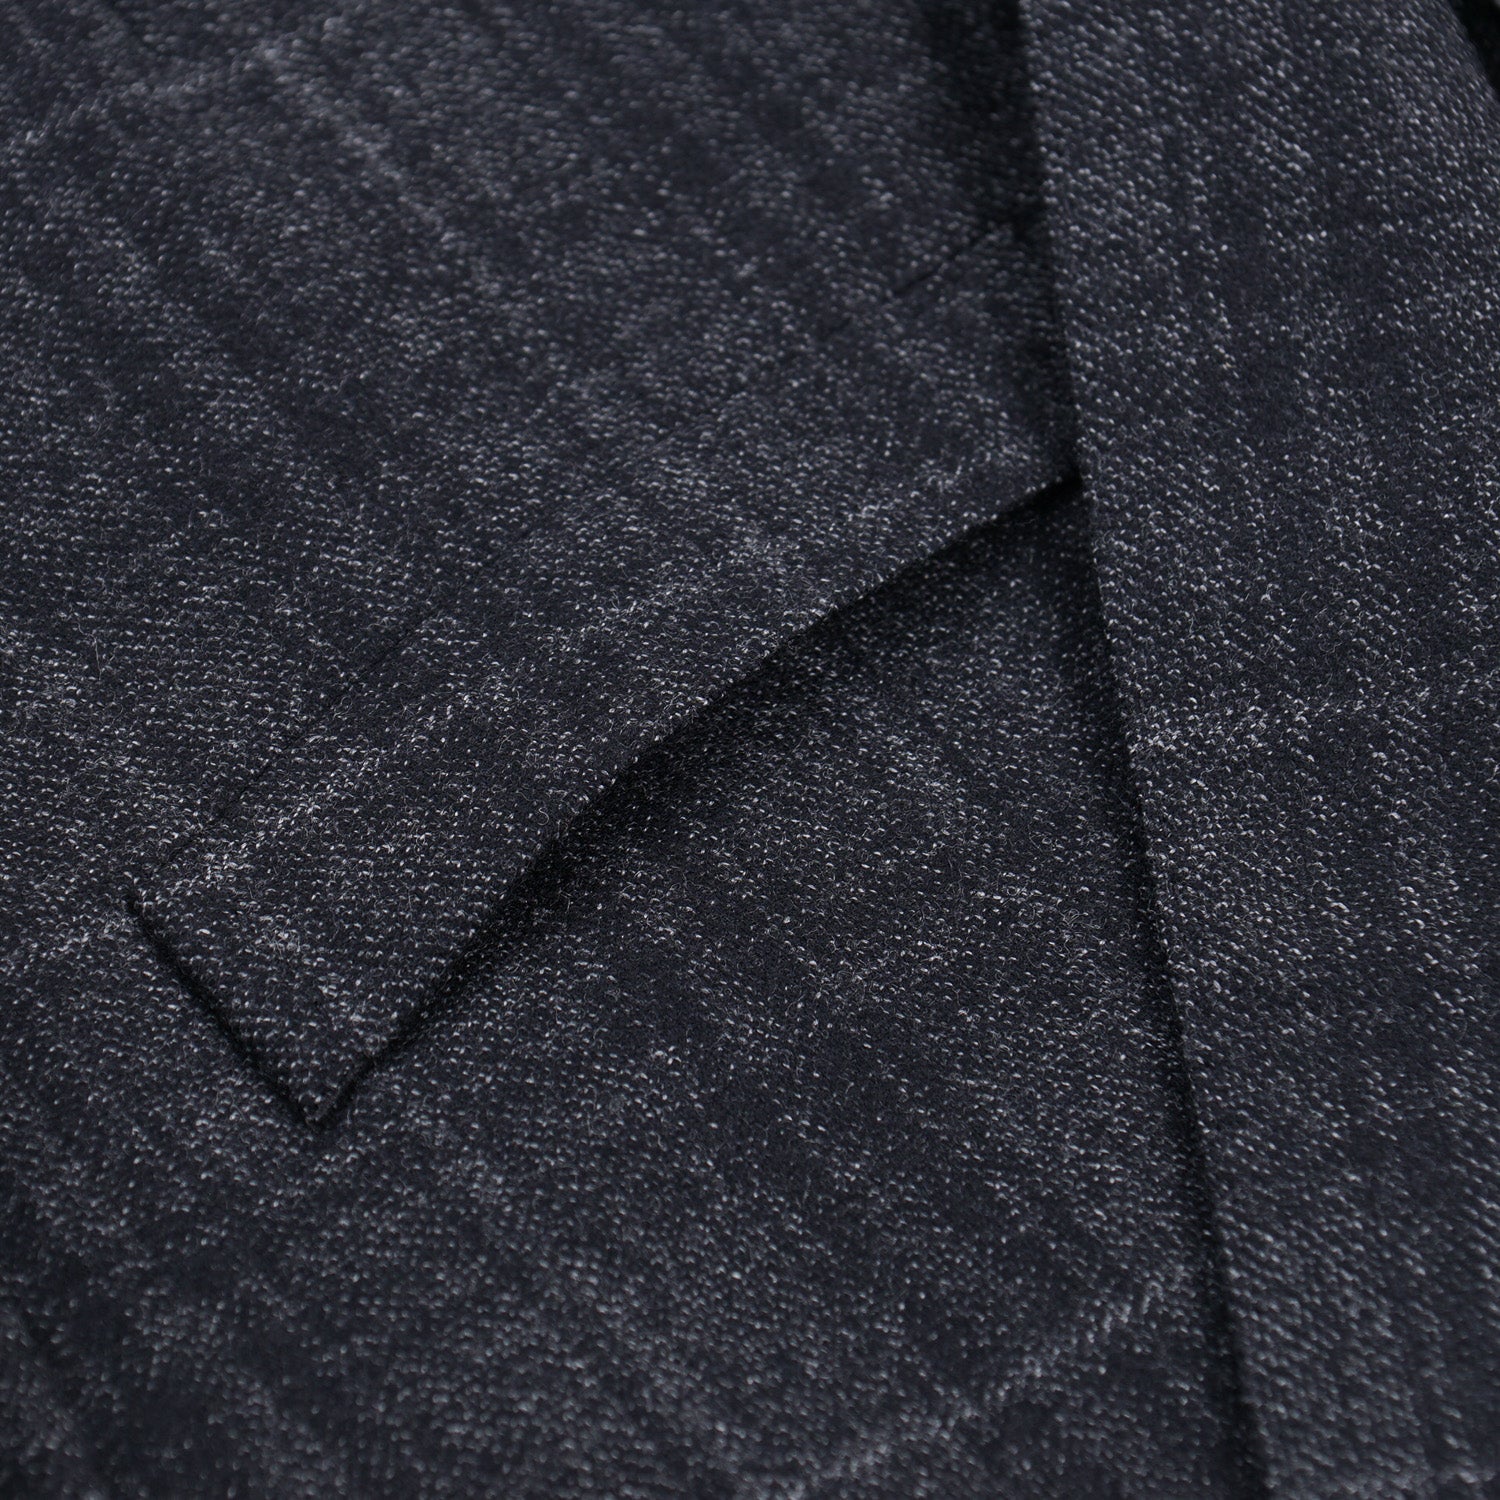 Boglioli Plaid Wool 'K Jacket' Suit - Top Shelf Apparel